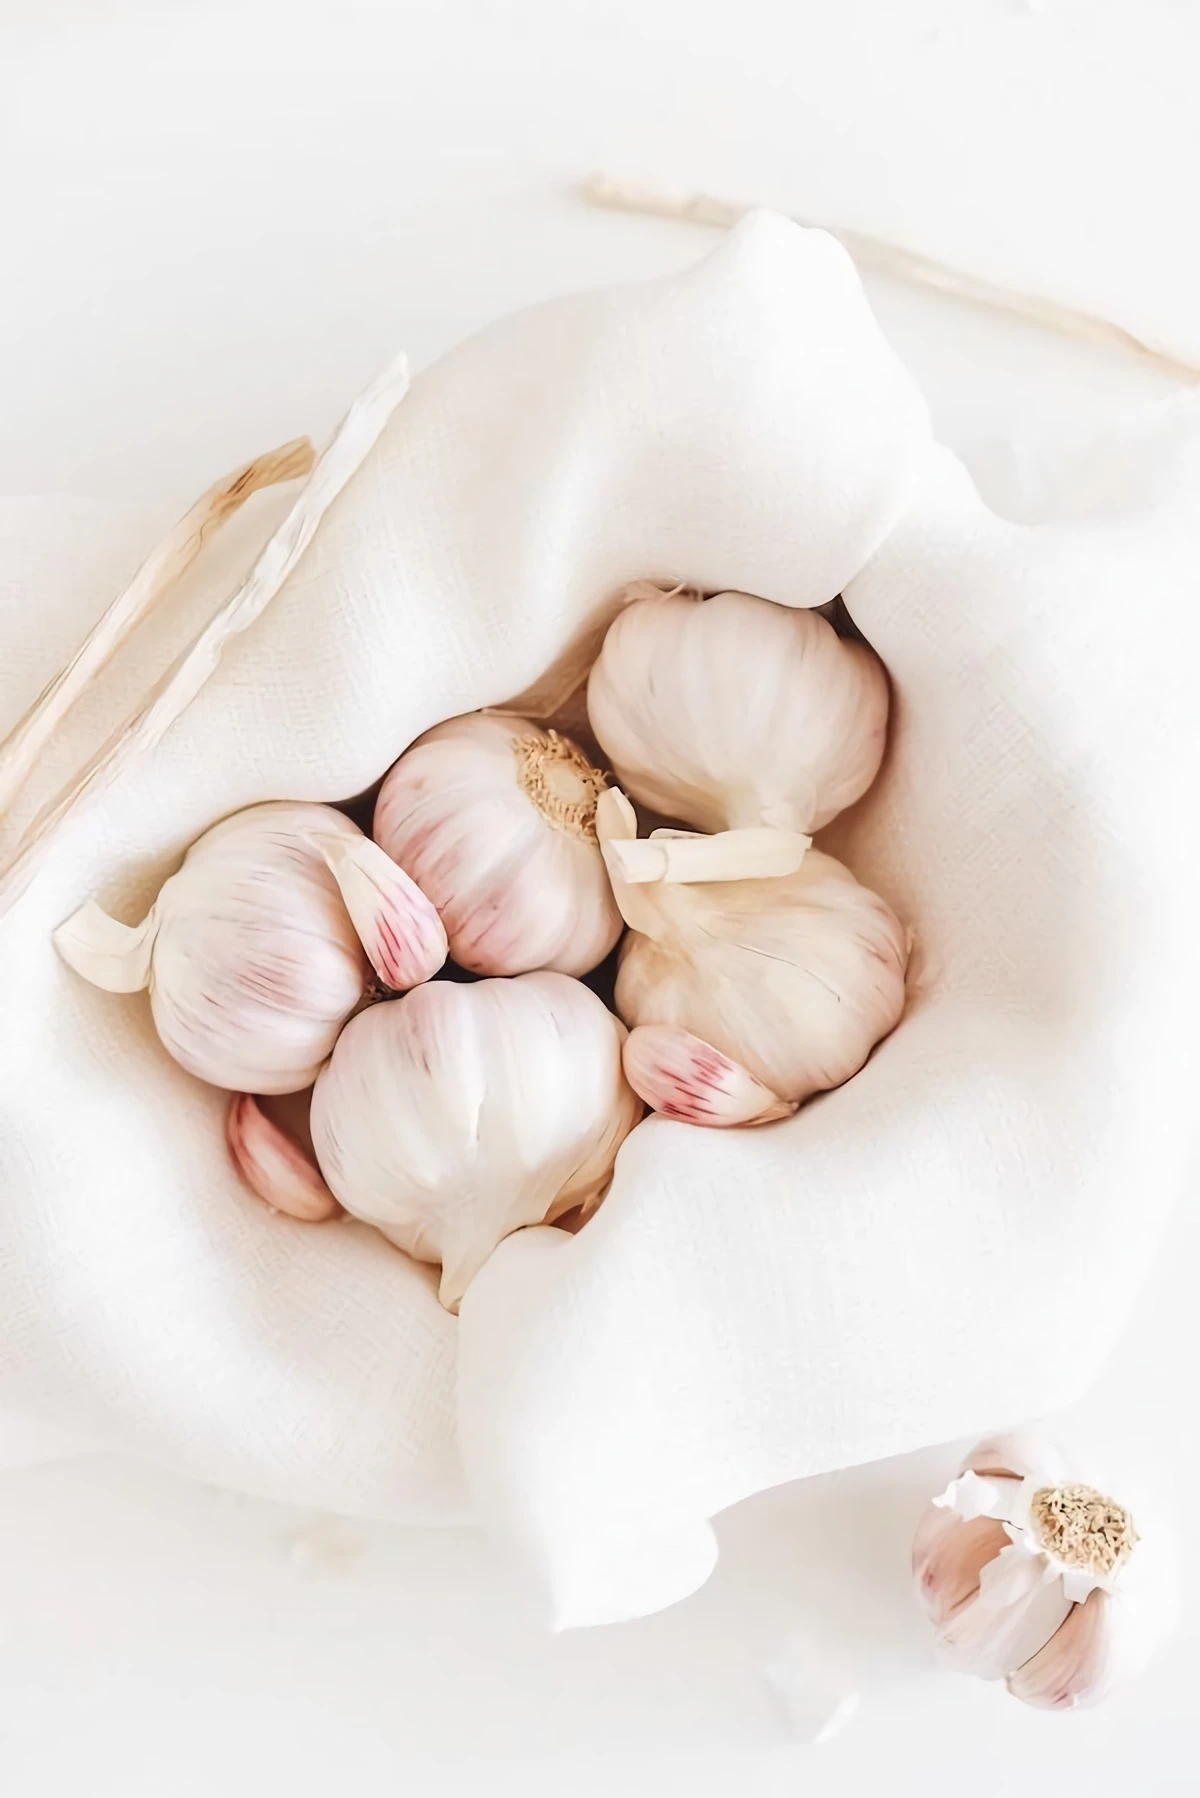 microwave hacks garlic in a hwite cloth